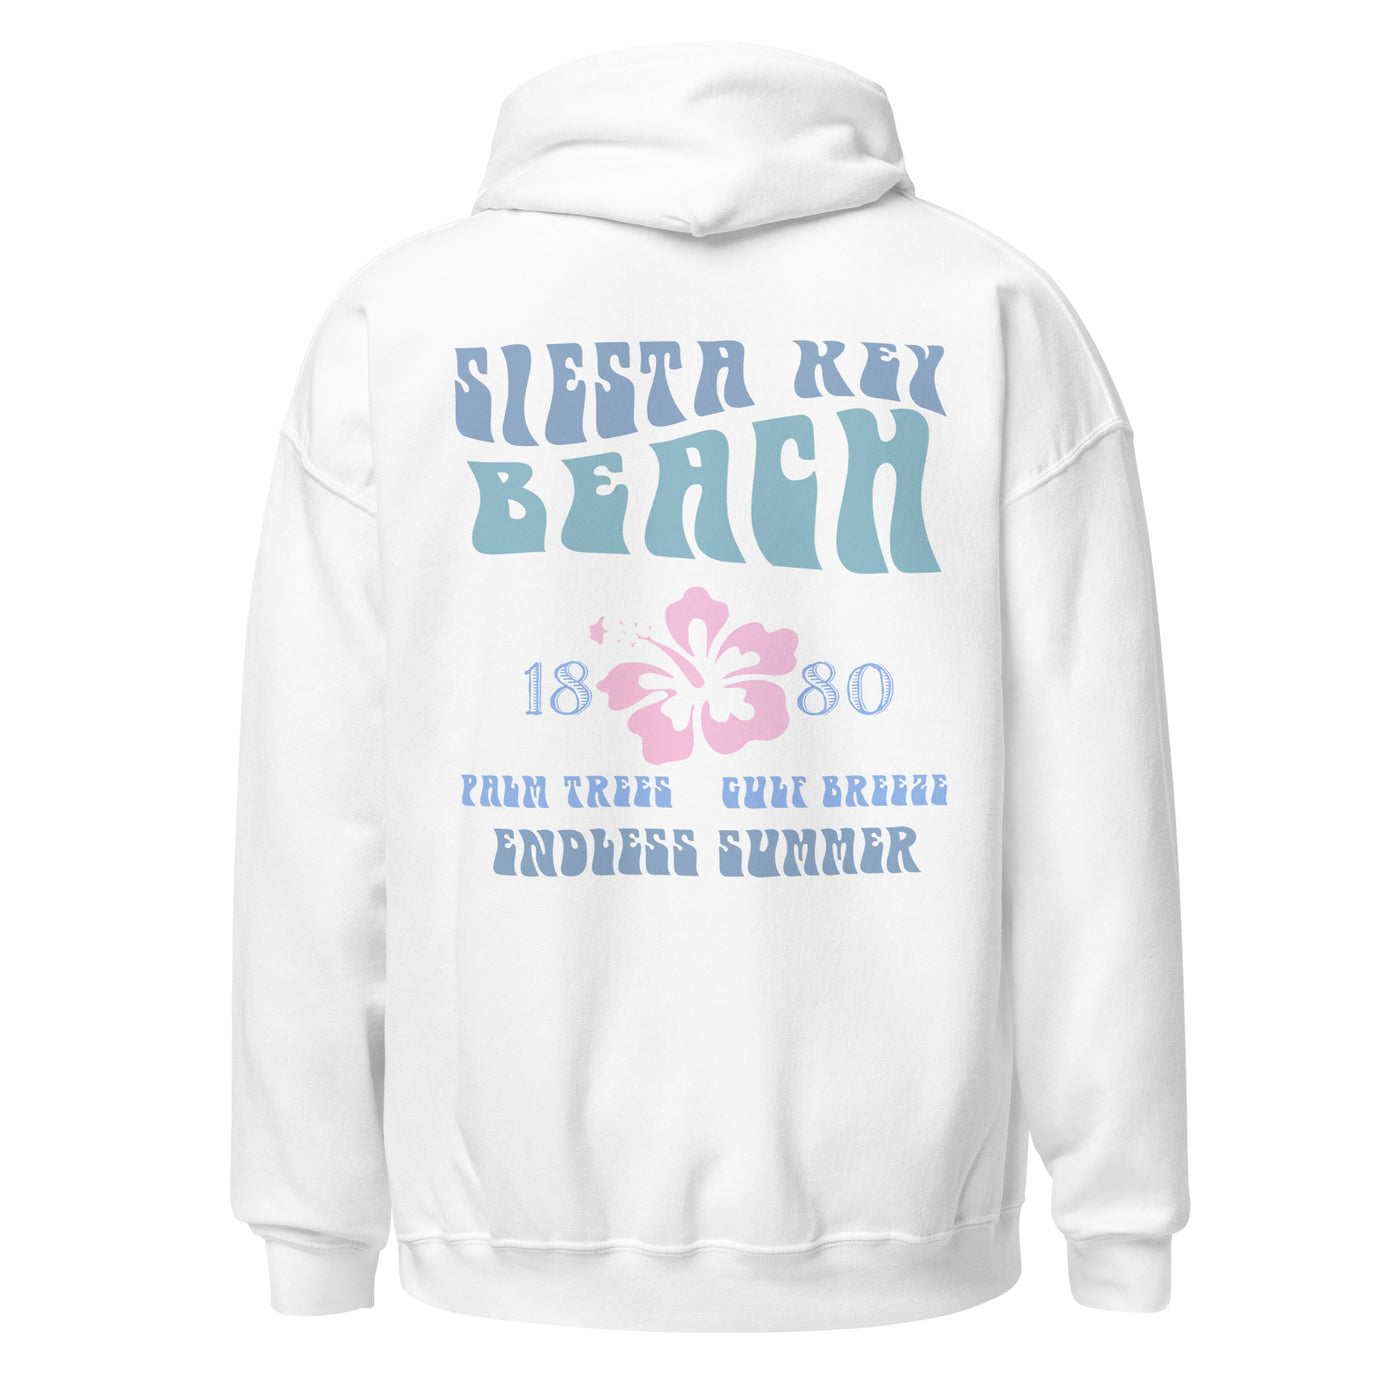 Unisex Siesta Key Beach Hoodie Jet-Spun Soft Feel Retro Endless Summer